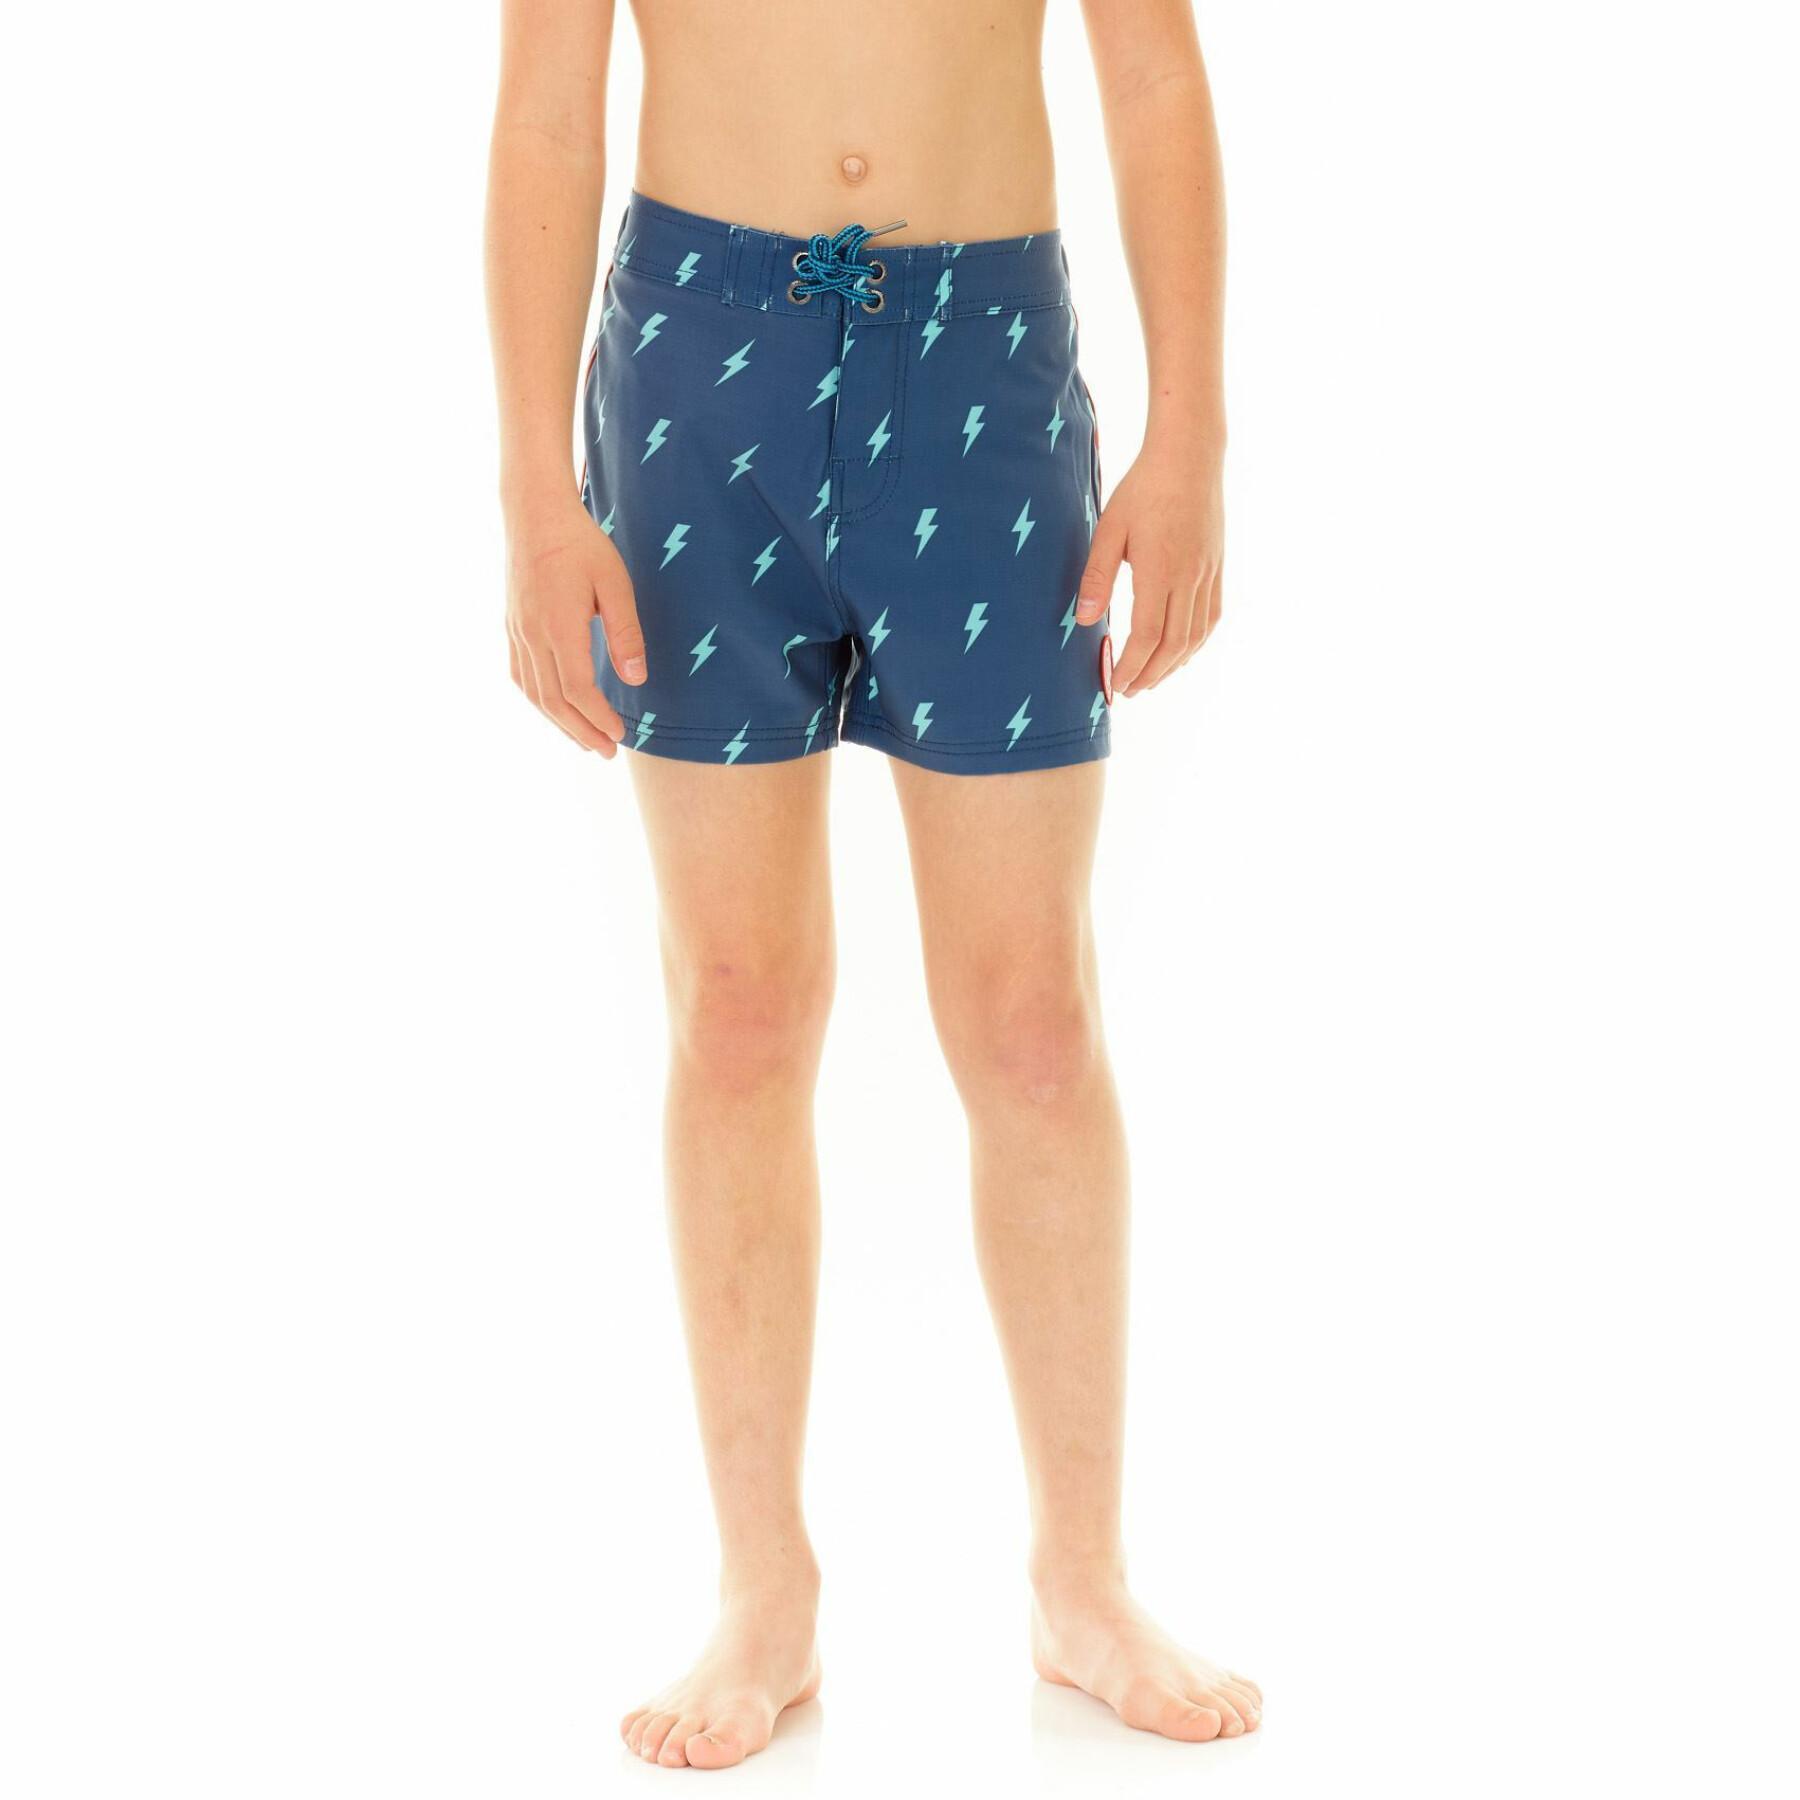 Swim shorts flat belt child Freegun soft touch Flash